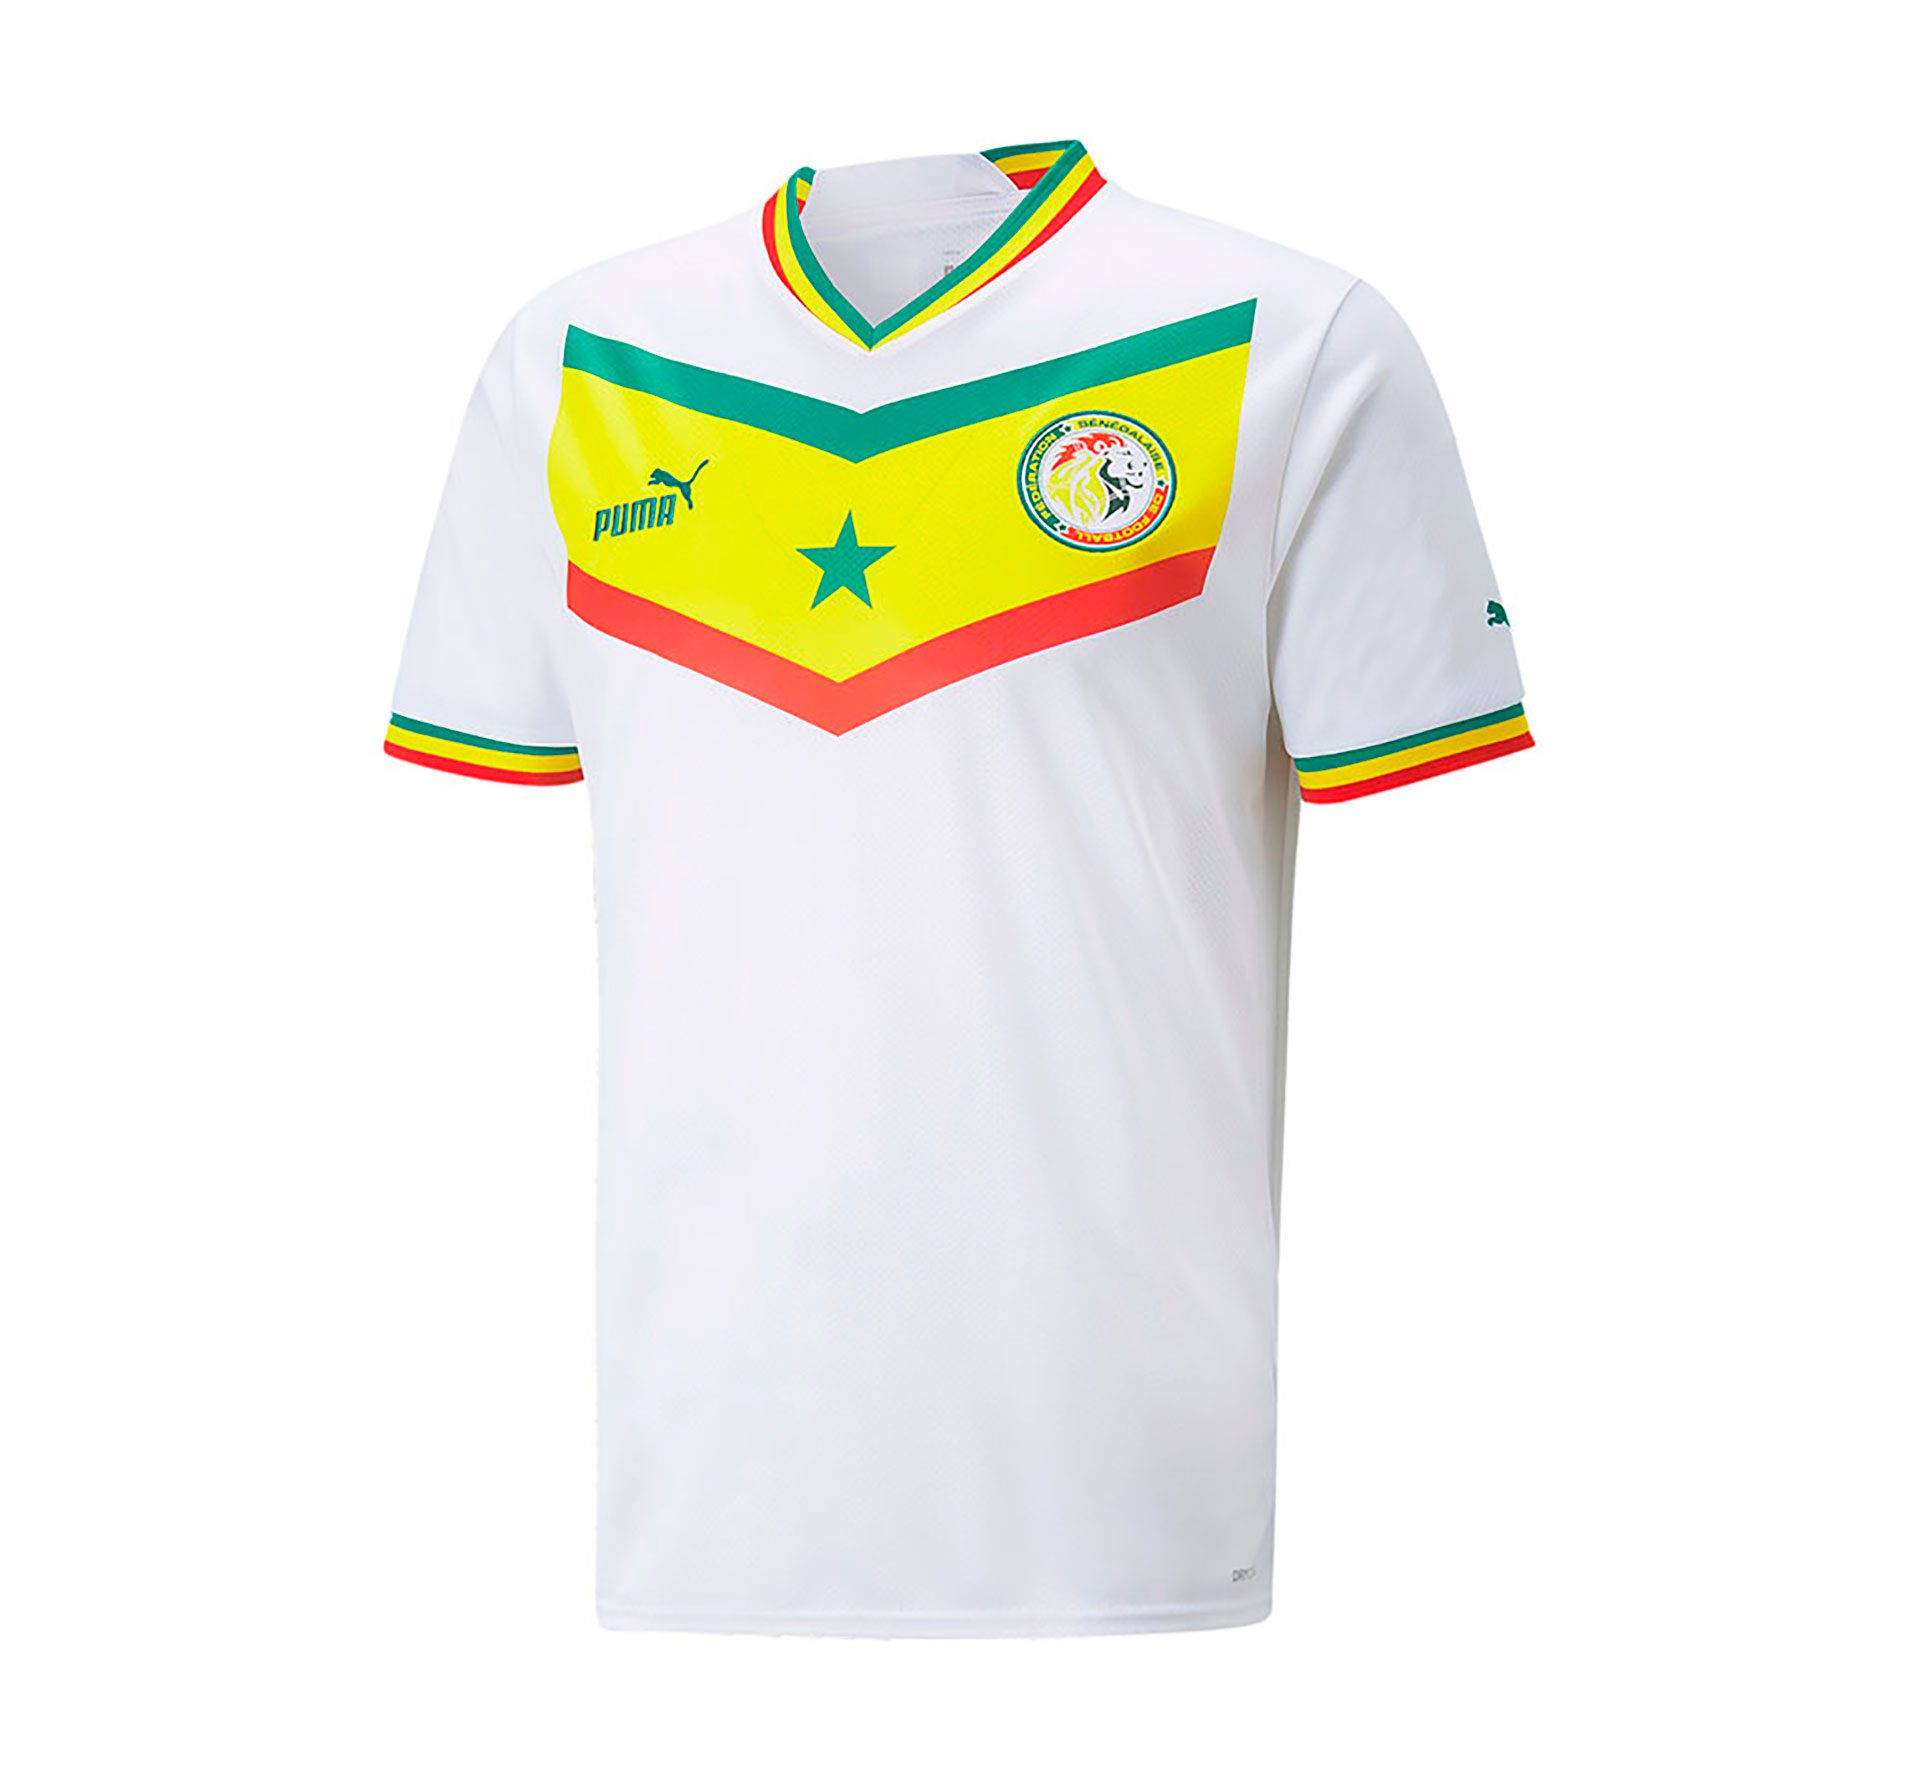 Senegal national team shirt